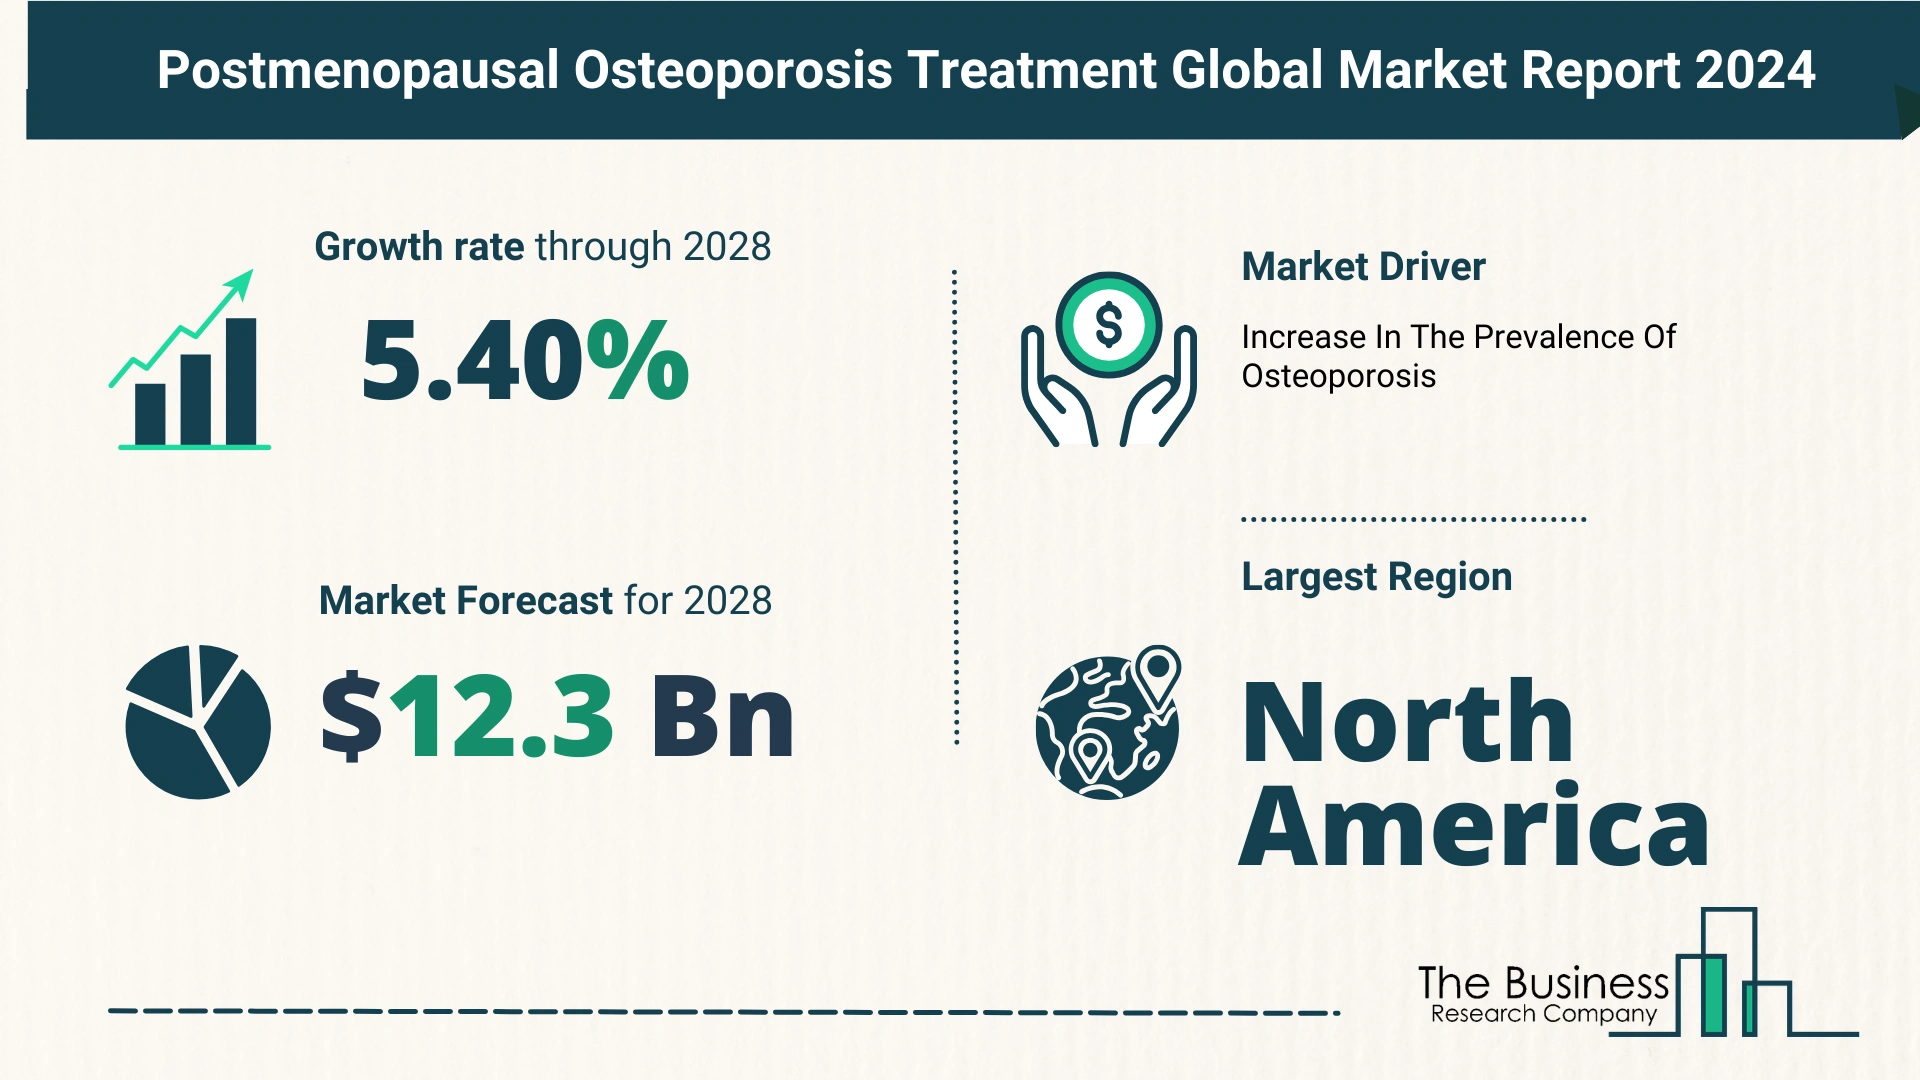 Global Postmenopausal Osteoporosis Treatment Market